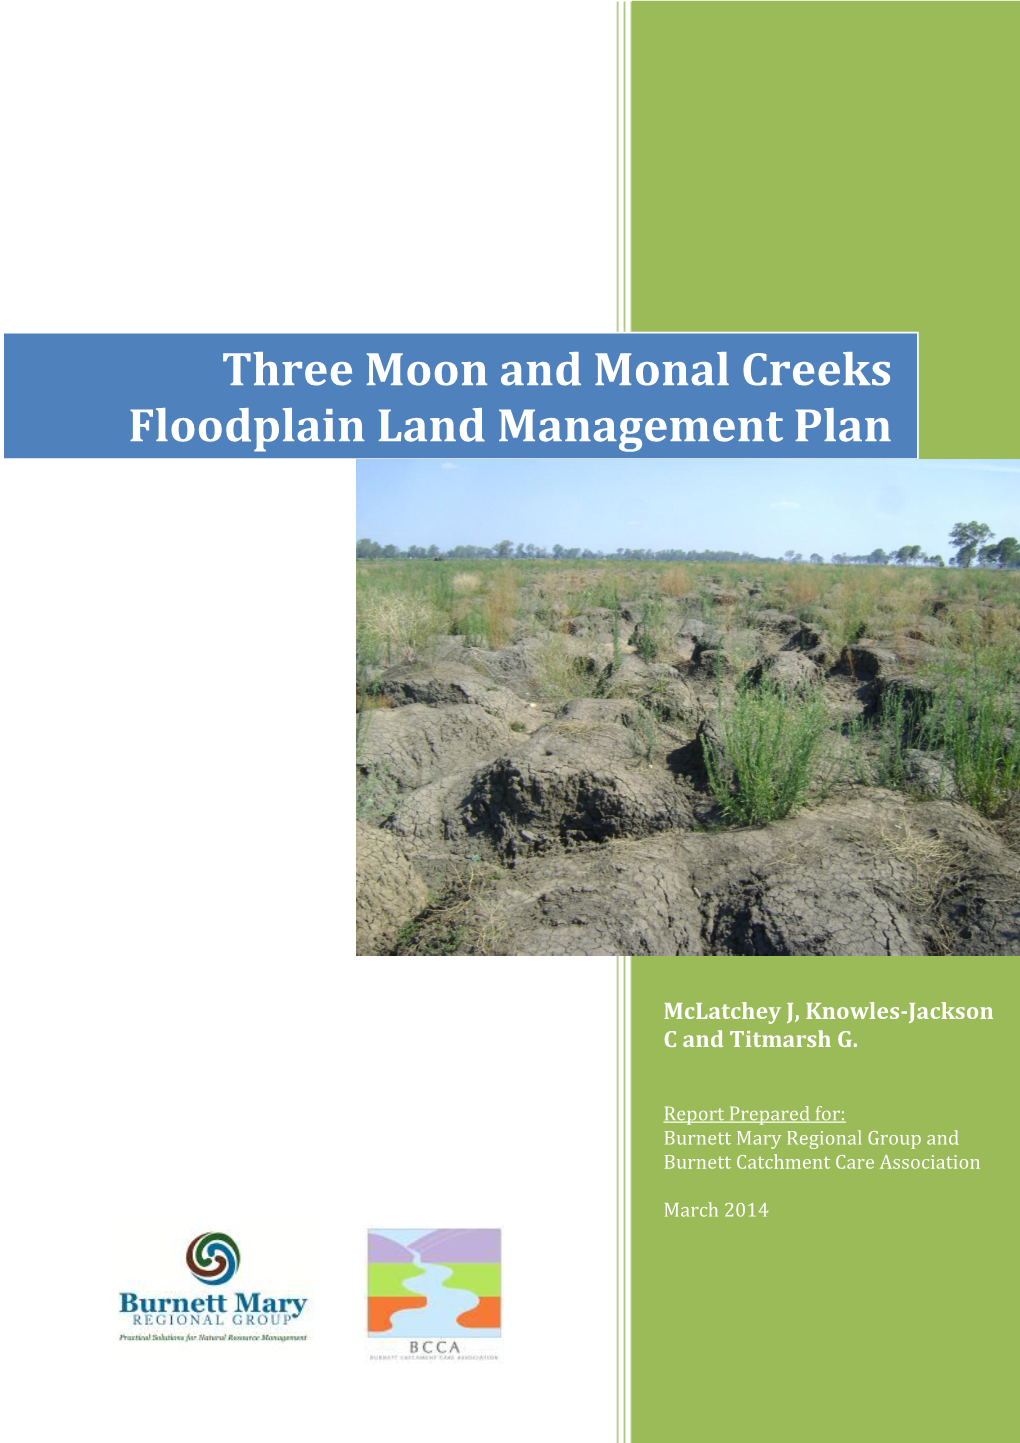 Three Moon and Monal Creeks Floodplain Land Management Plan